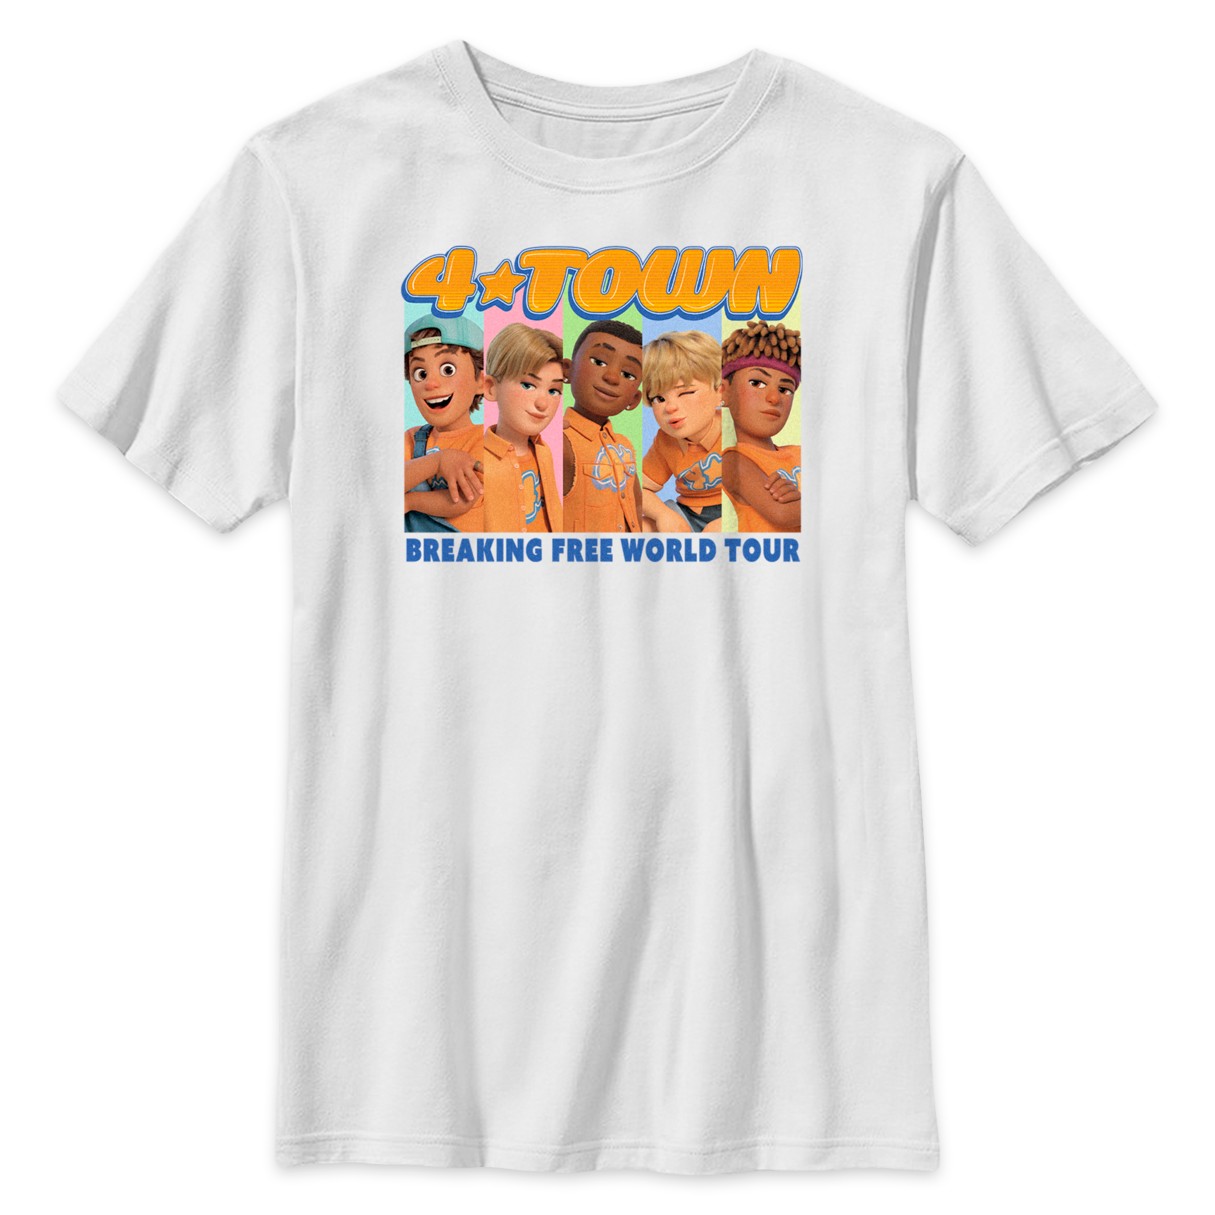 4★Town ''Breaking Free World Tour'' T-Shirt for Kids – Turning Red